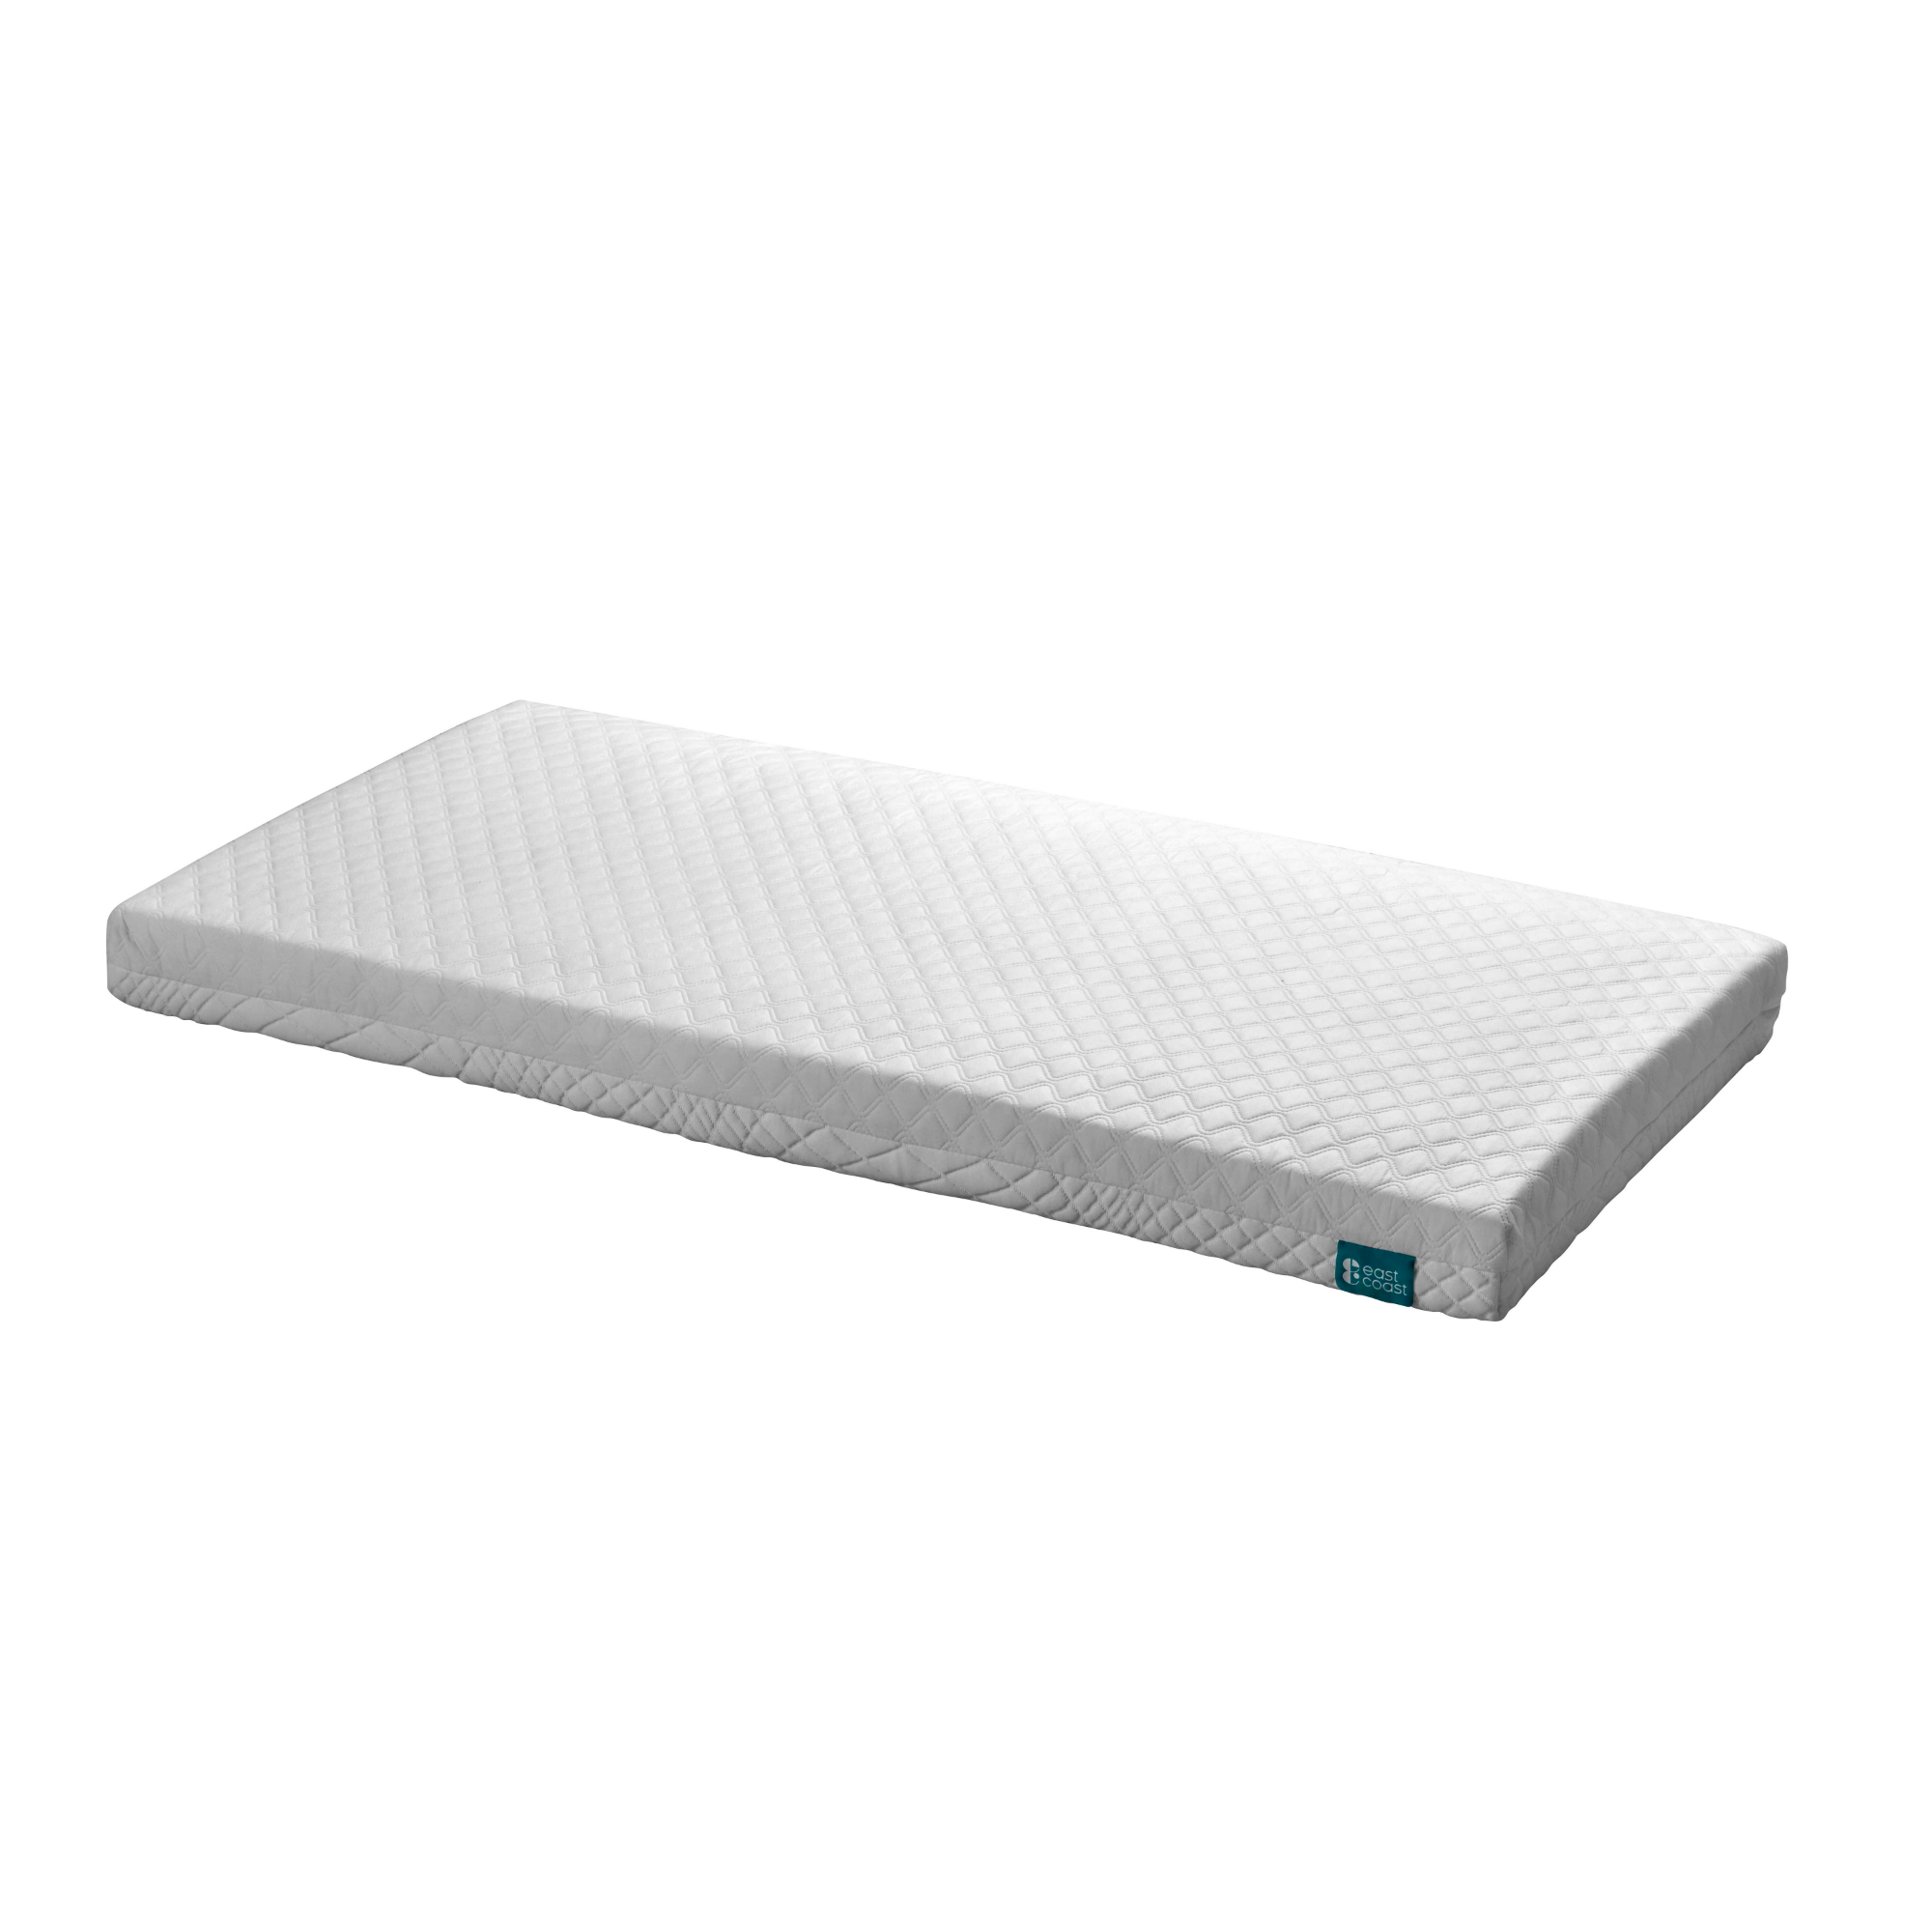 mattress for a baby crib